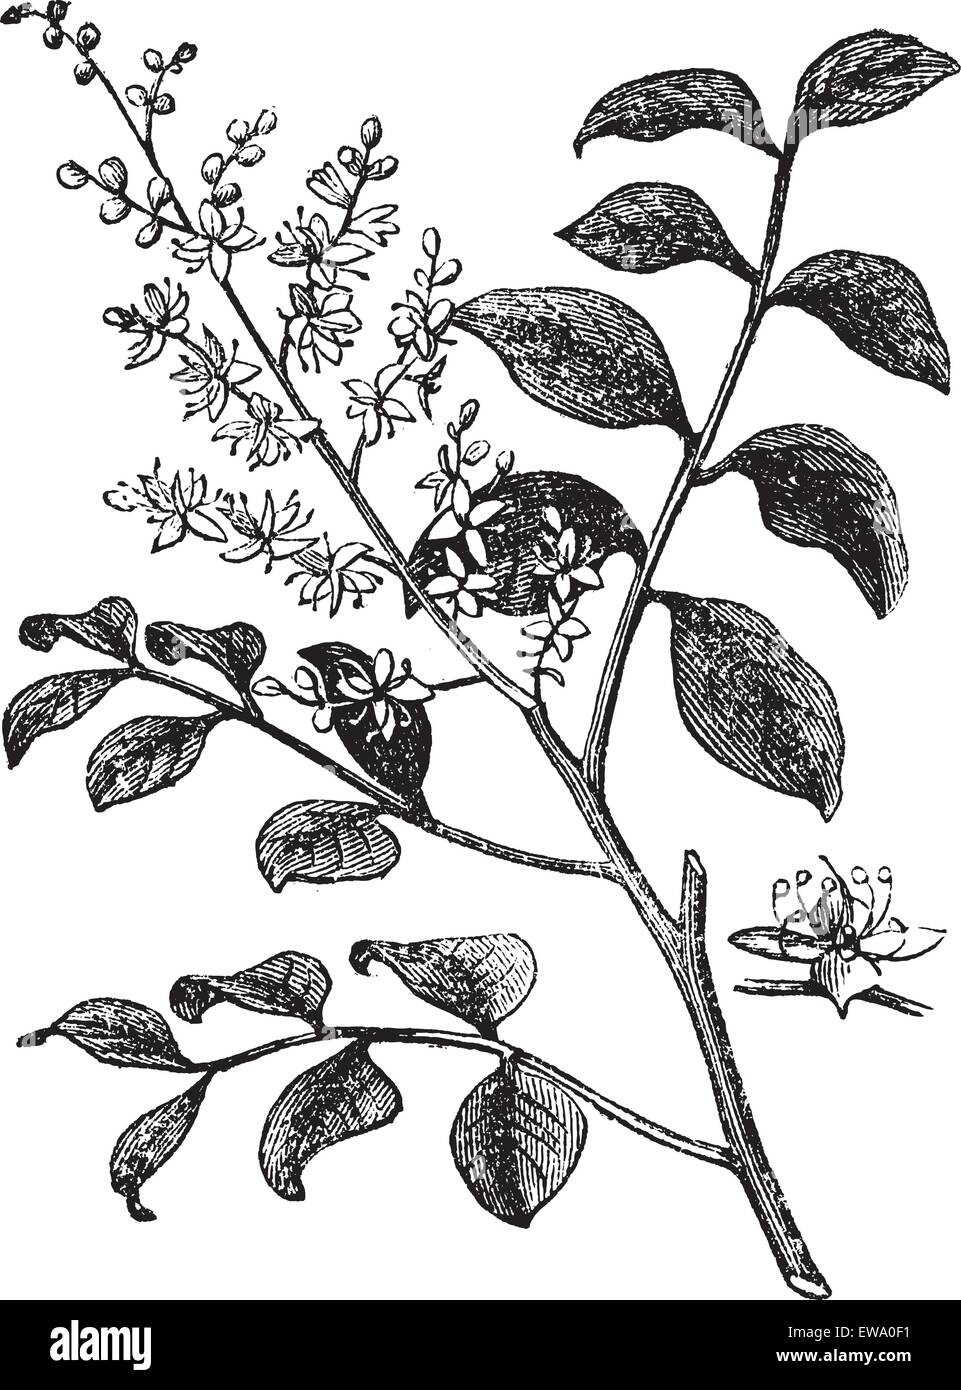 Diesel Tree or Kerosene Tree or Kupa'y or Cabismo or Copauva Cabimo or Copaifera sp., vintage engraving. Old engraved illustration of Diesel Tree branch showing flowers. Stock Vector